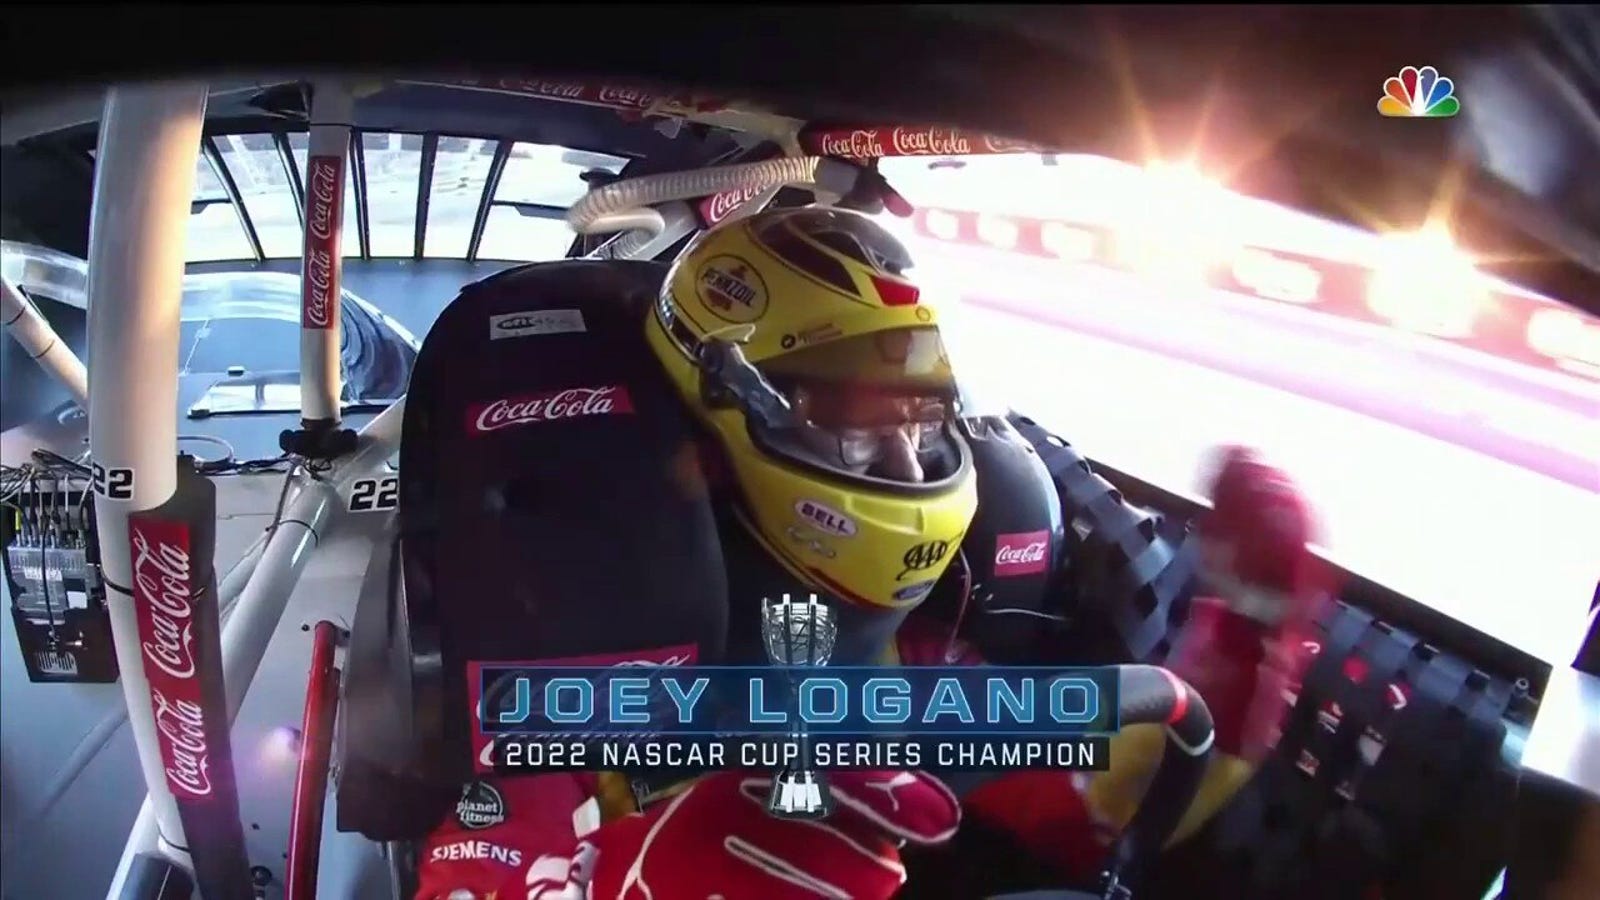 Joey Logano remporte le championnat NASCAR Cup Series